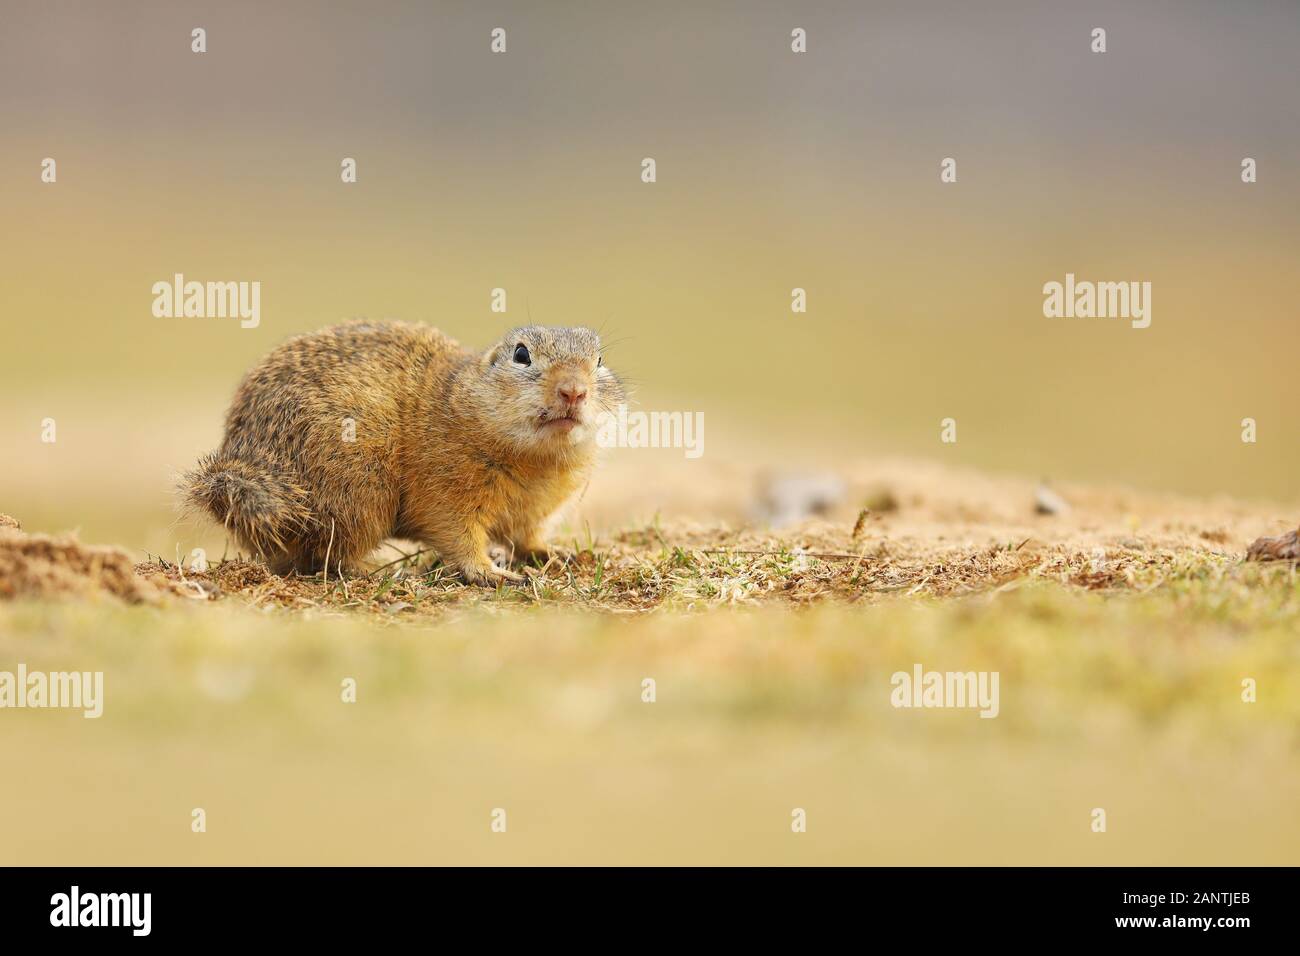 European Ground Squirrel, Spermophilus citellus, sitting in the grass during late summer, detail animal portrait, Czech Republic. Stock Photo